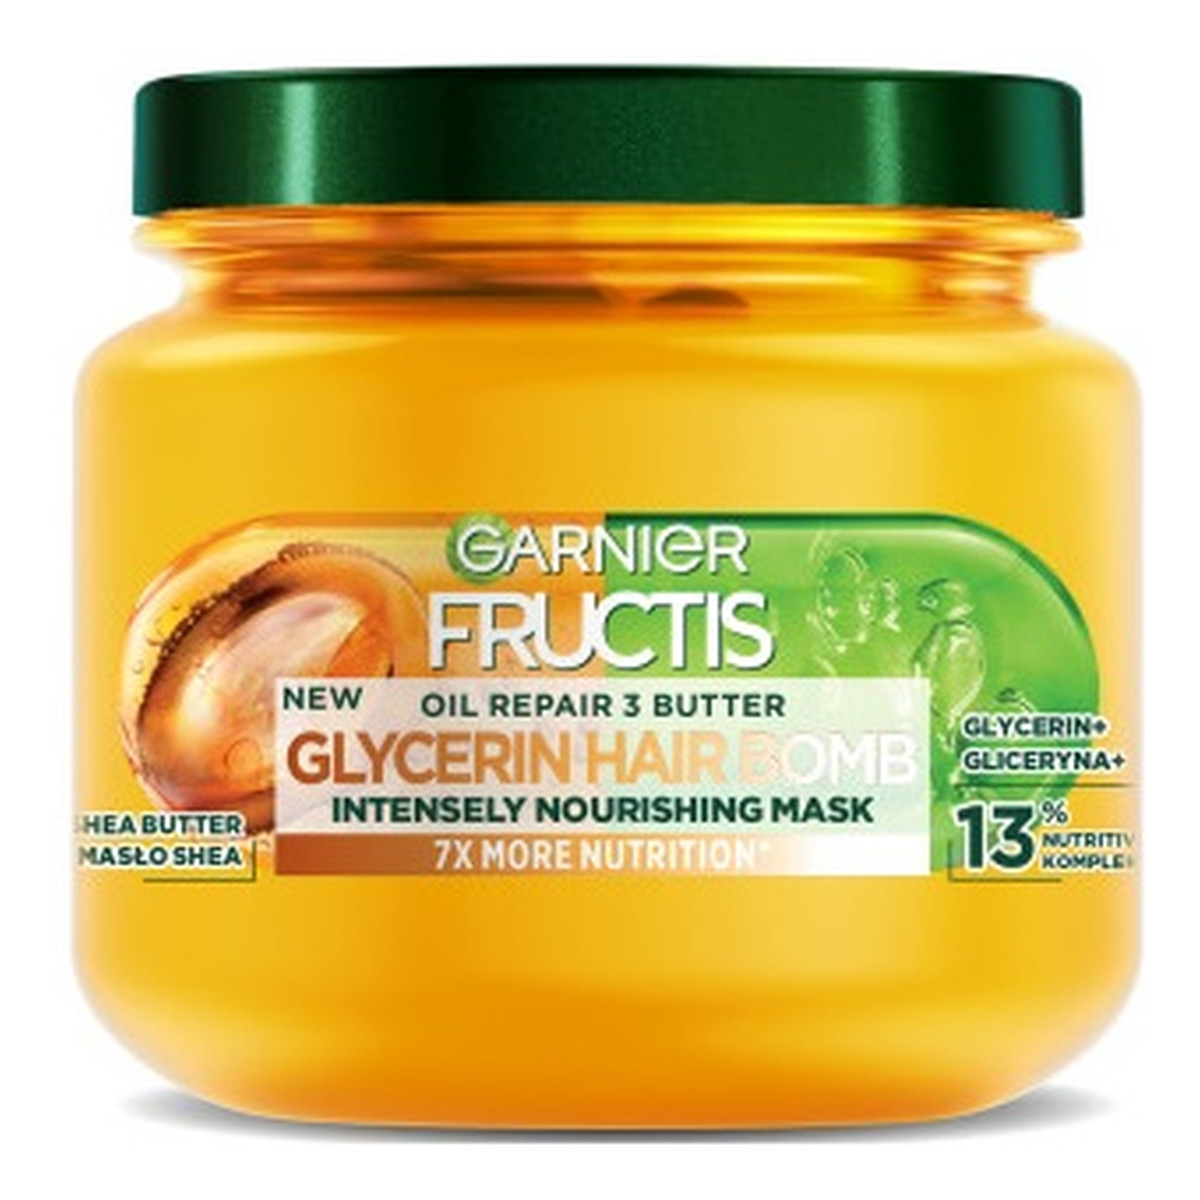 Garnier Fructis oil repair 3 butter glycerin hair bomb odżywcza maska do włosów 320ml